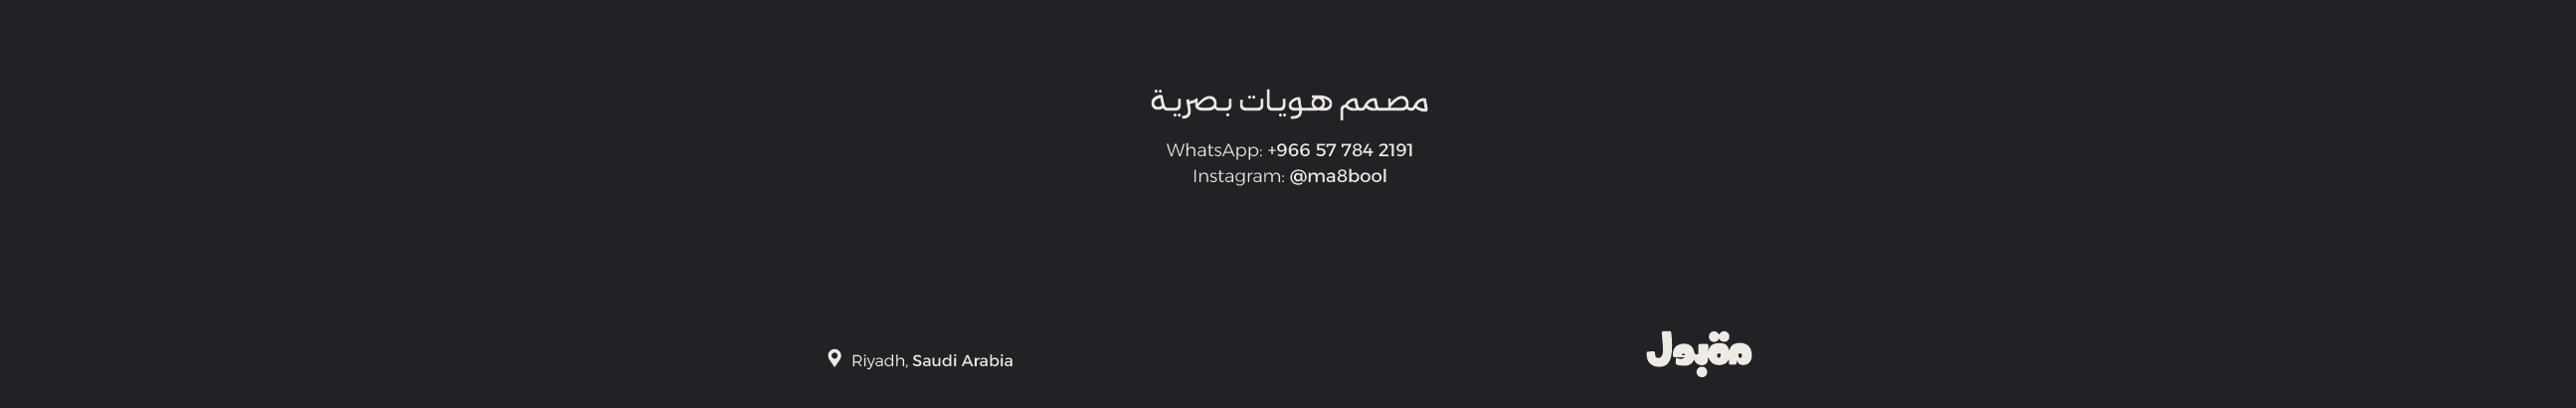 AbdulElah Maqbool's profile banner